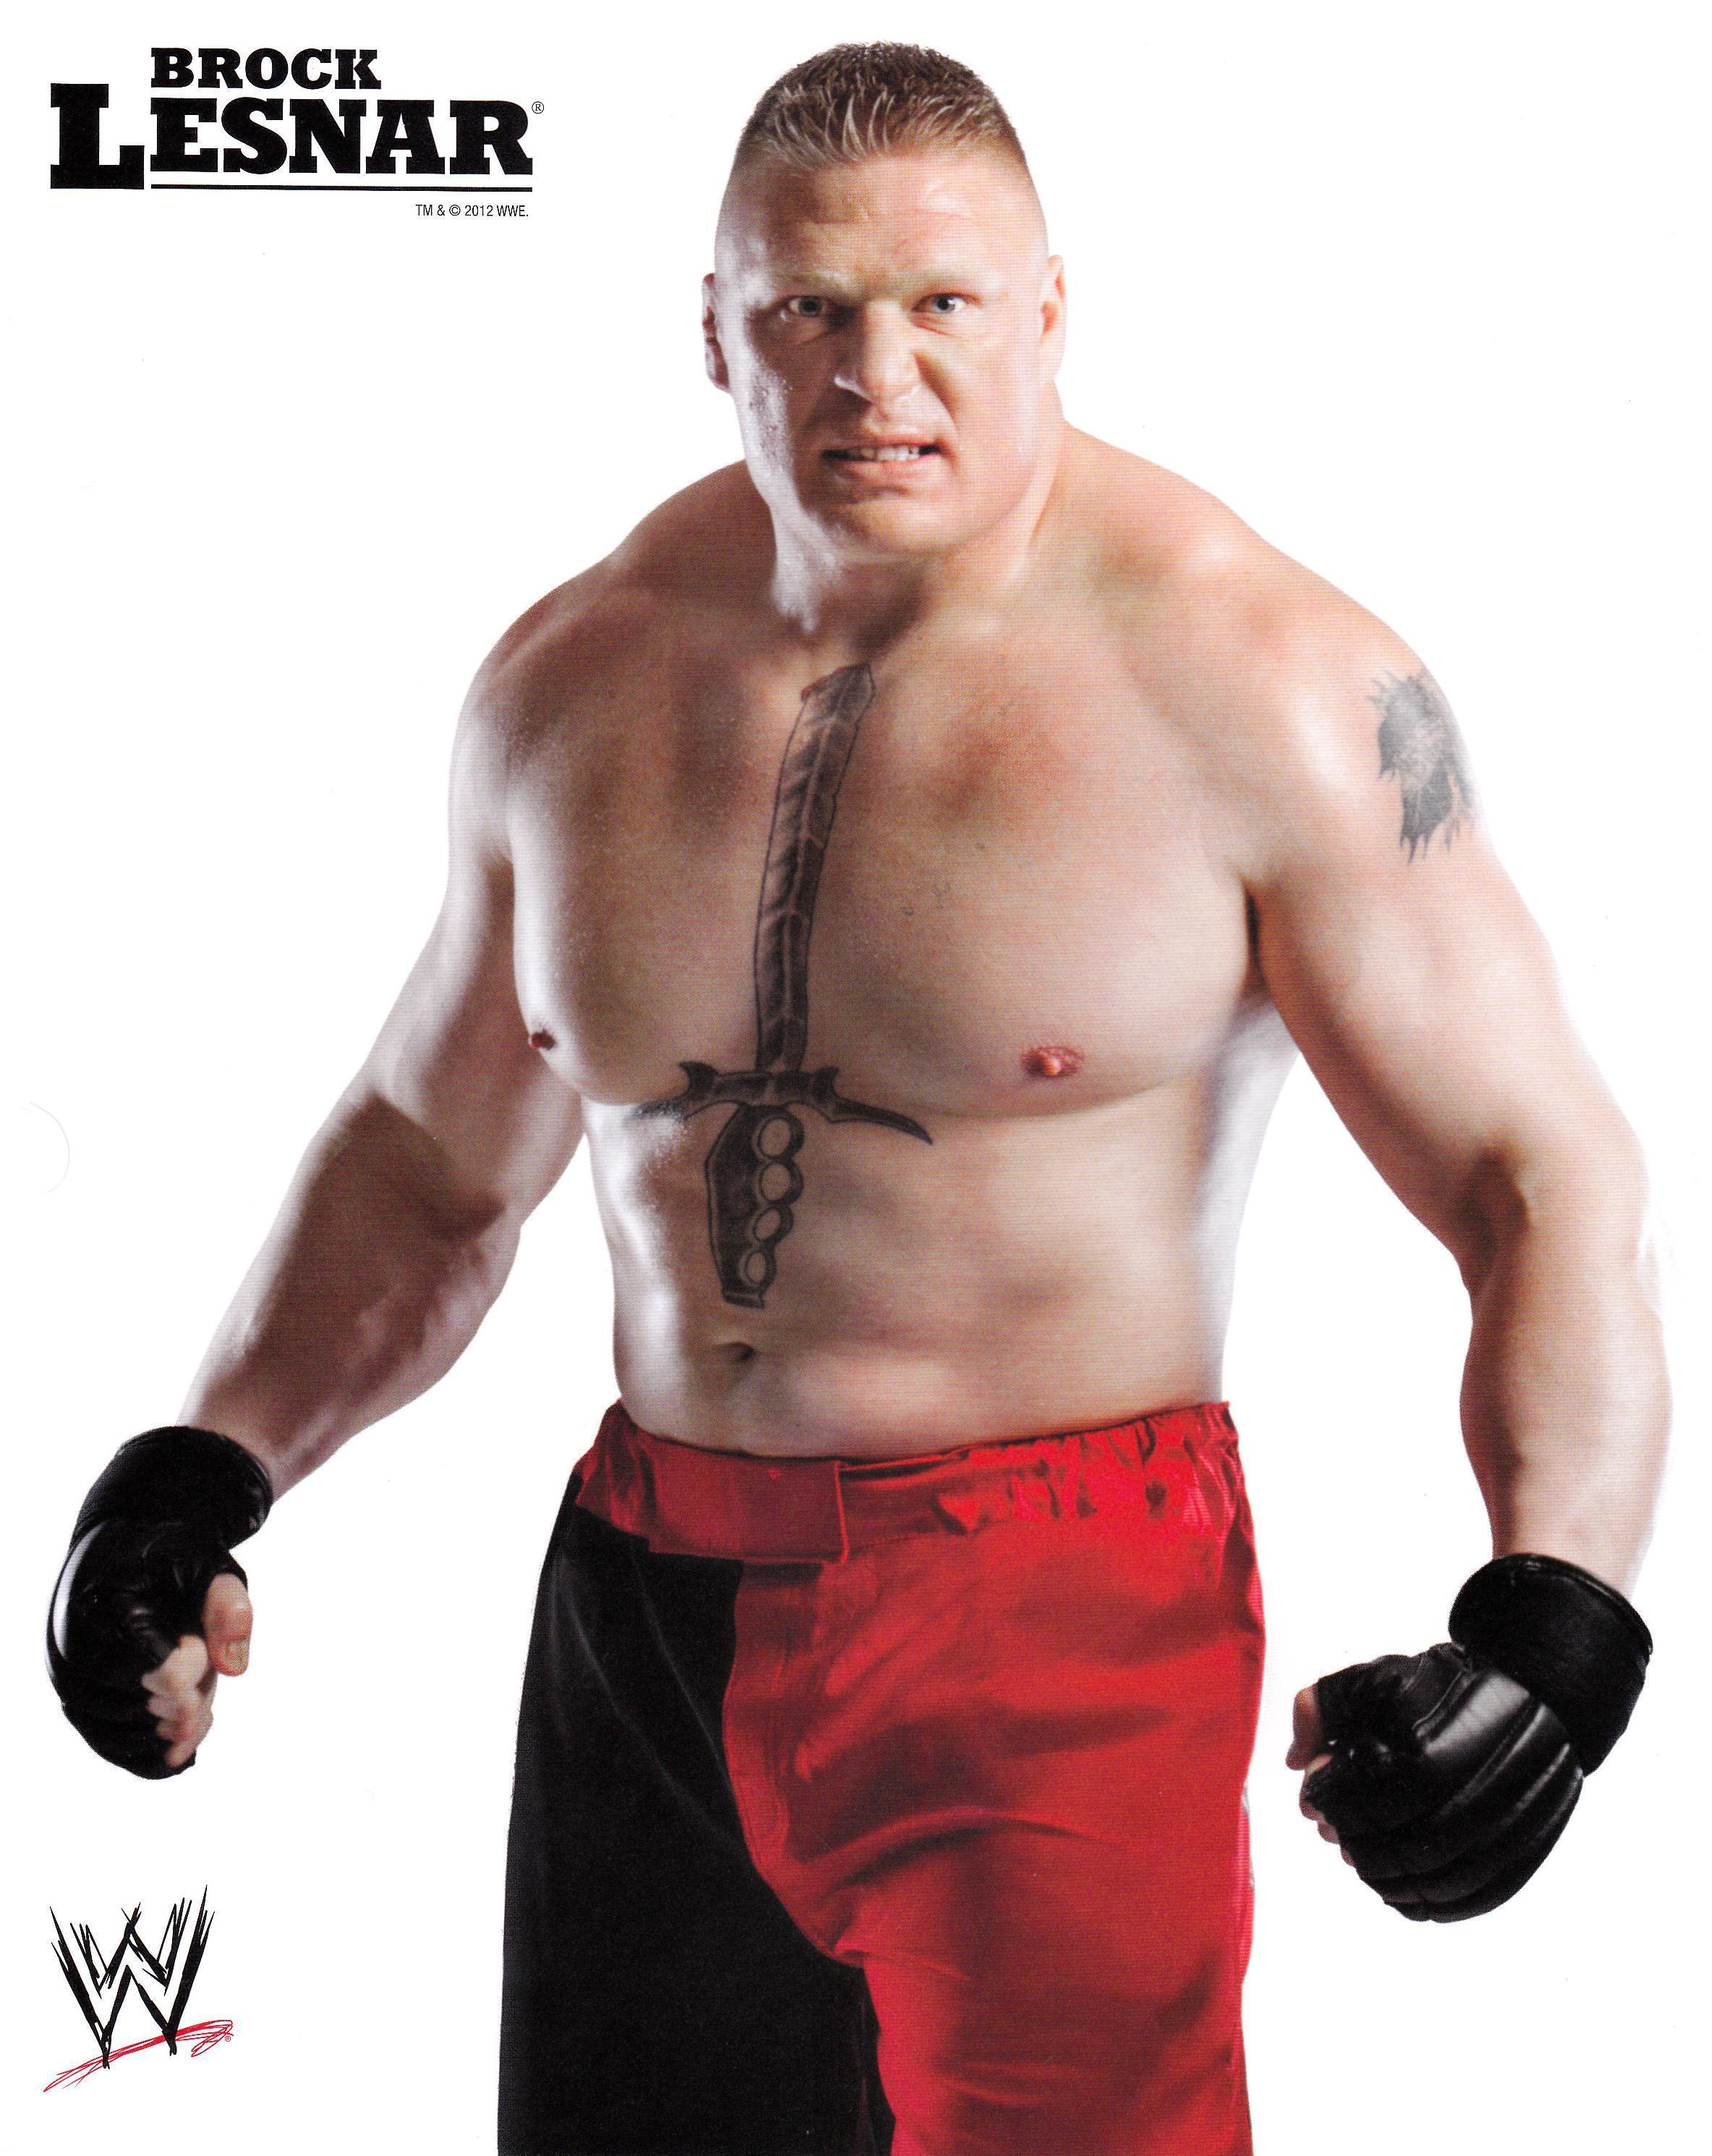 WWE Fighter BROCK LESNAR HD Wallpapers